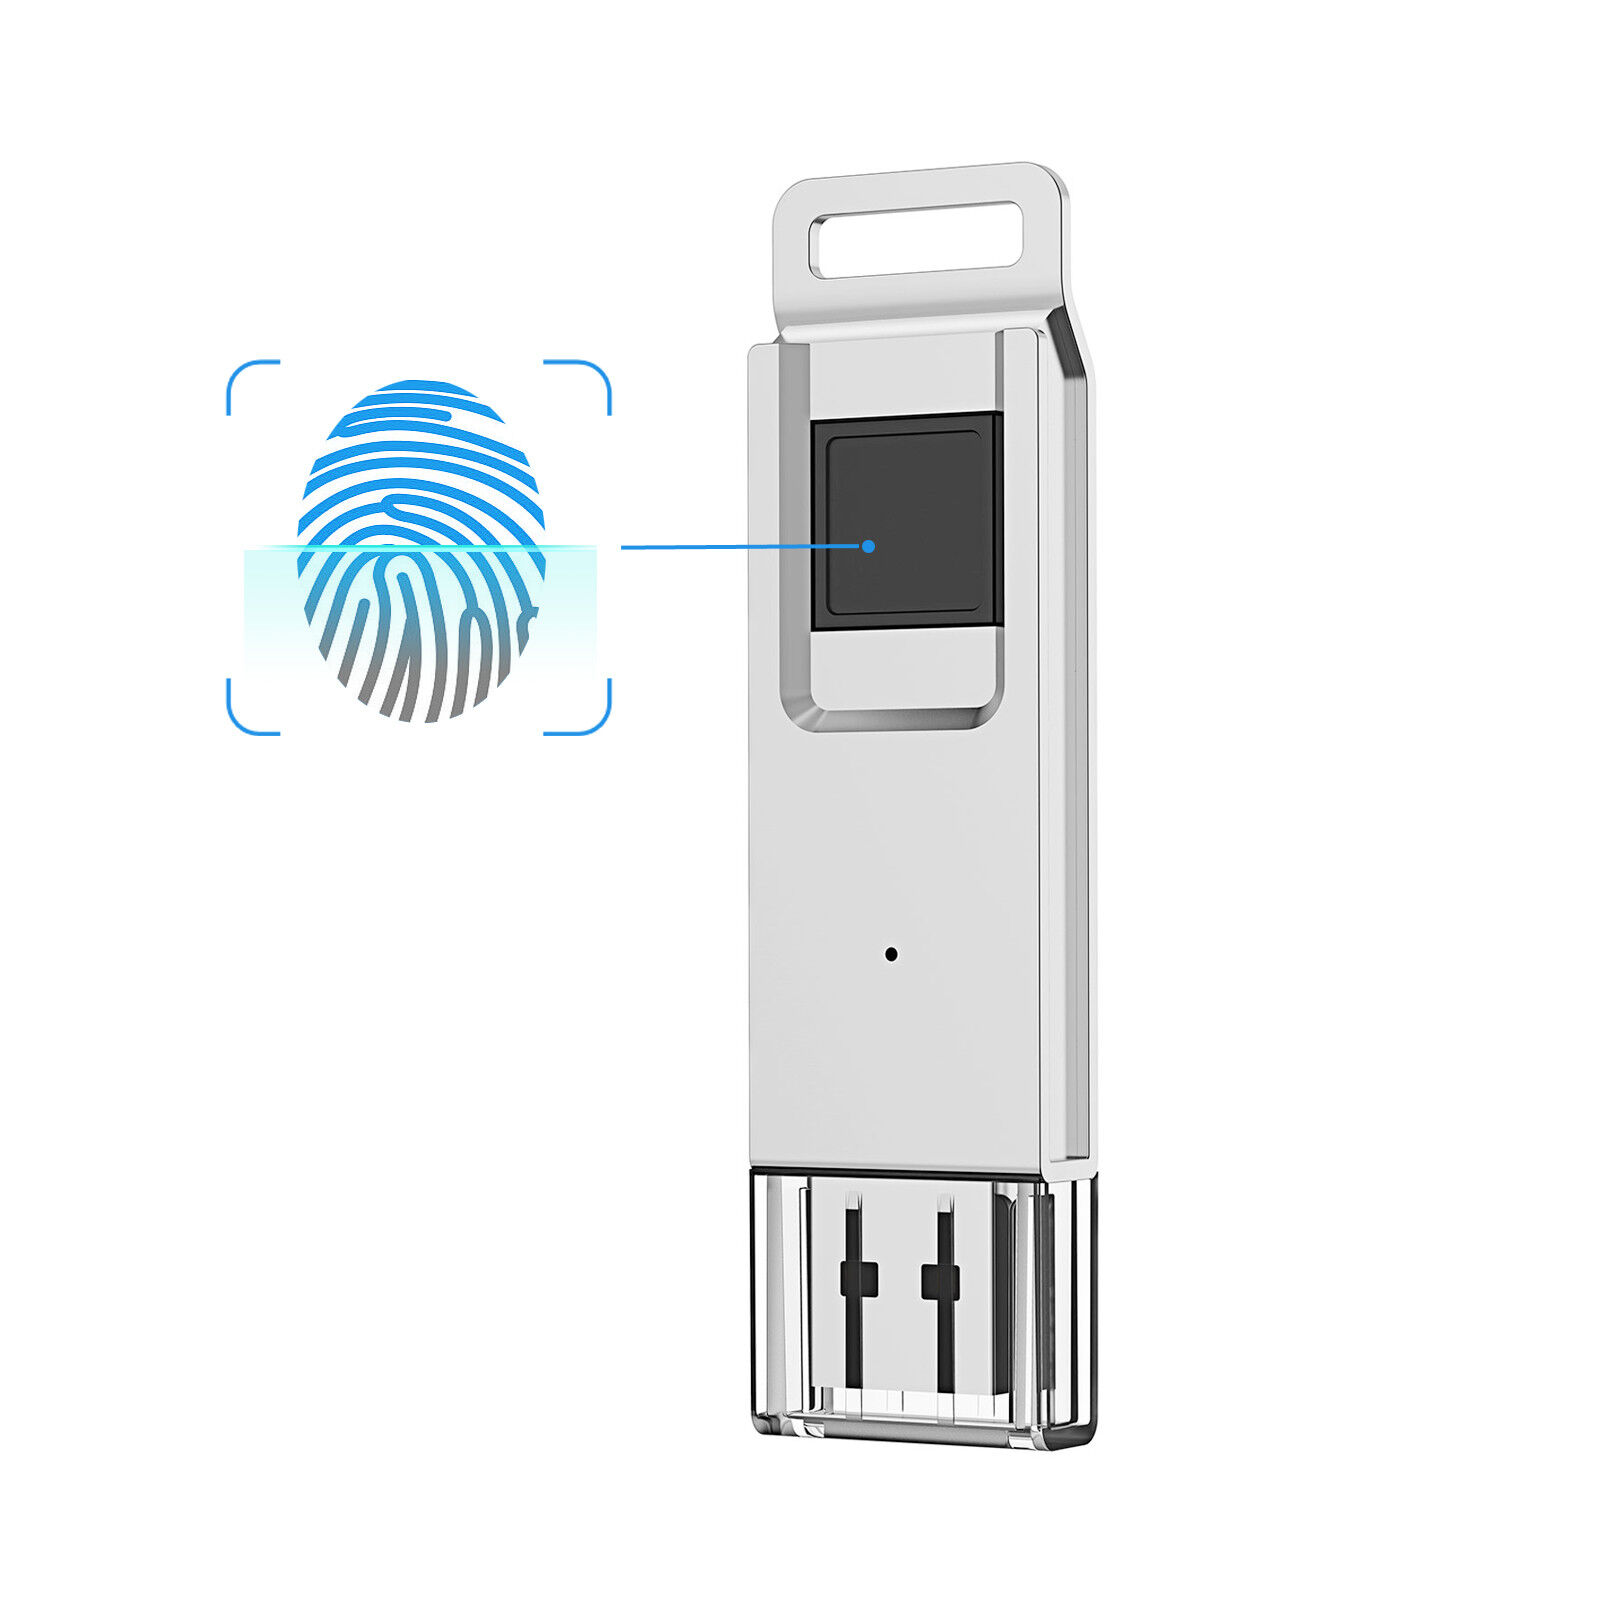 32G/128G Security Recognition Fingerprint Encrypted High tech USB3.0 Flash Drive